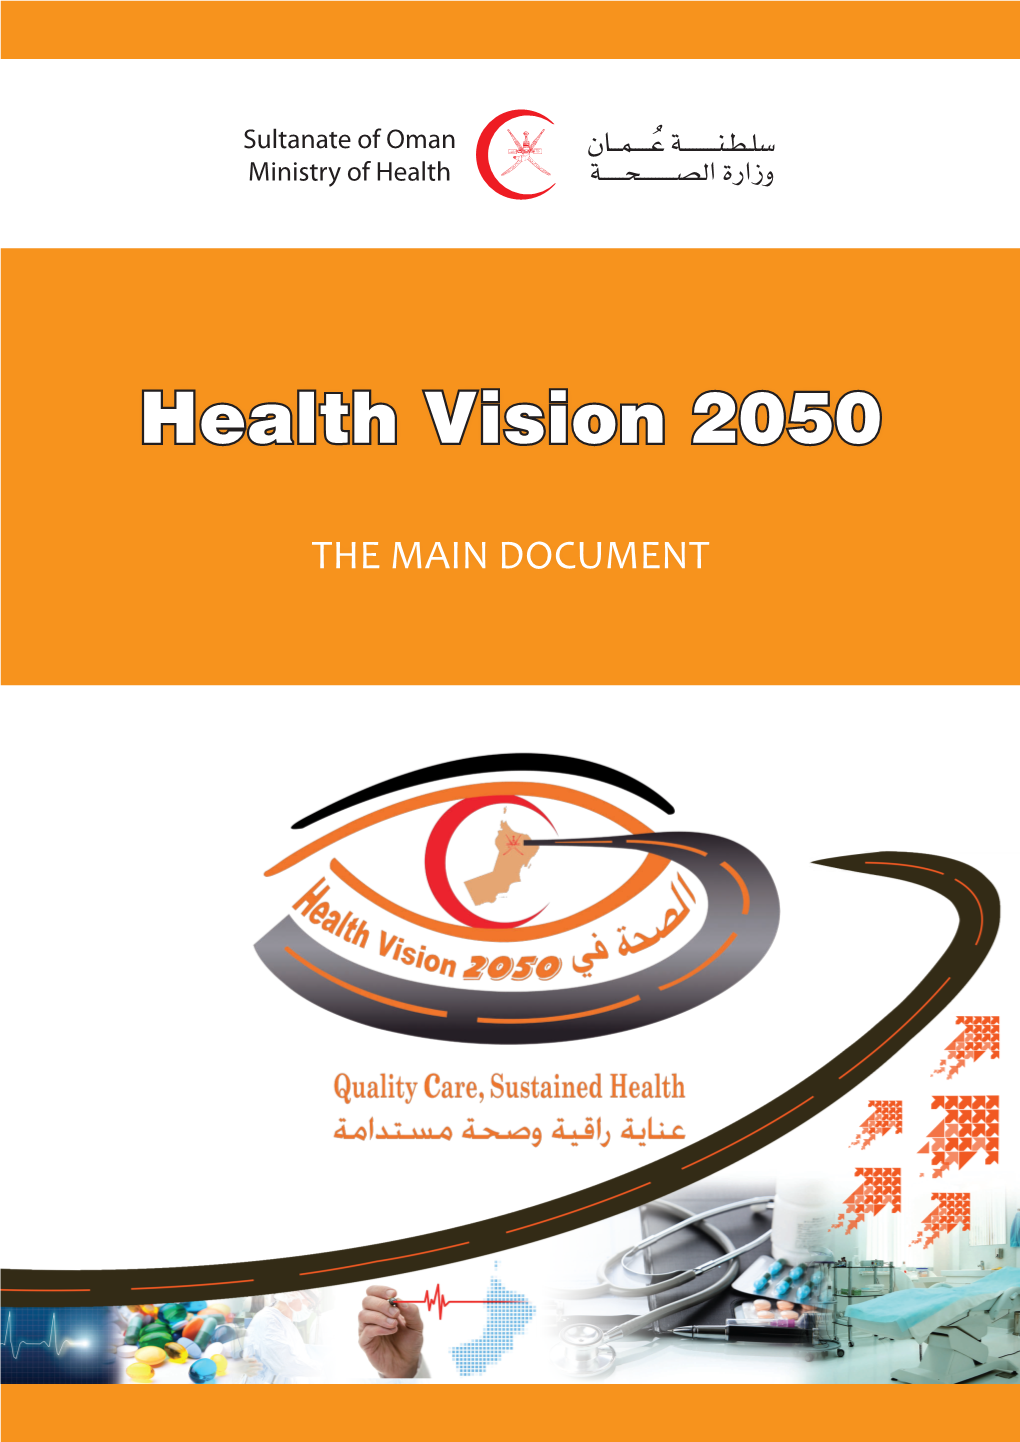 Health Vision 2050 Sultanate of Oman